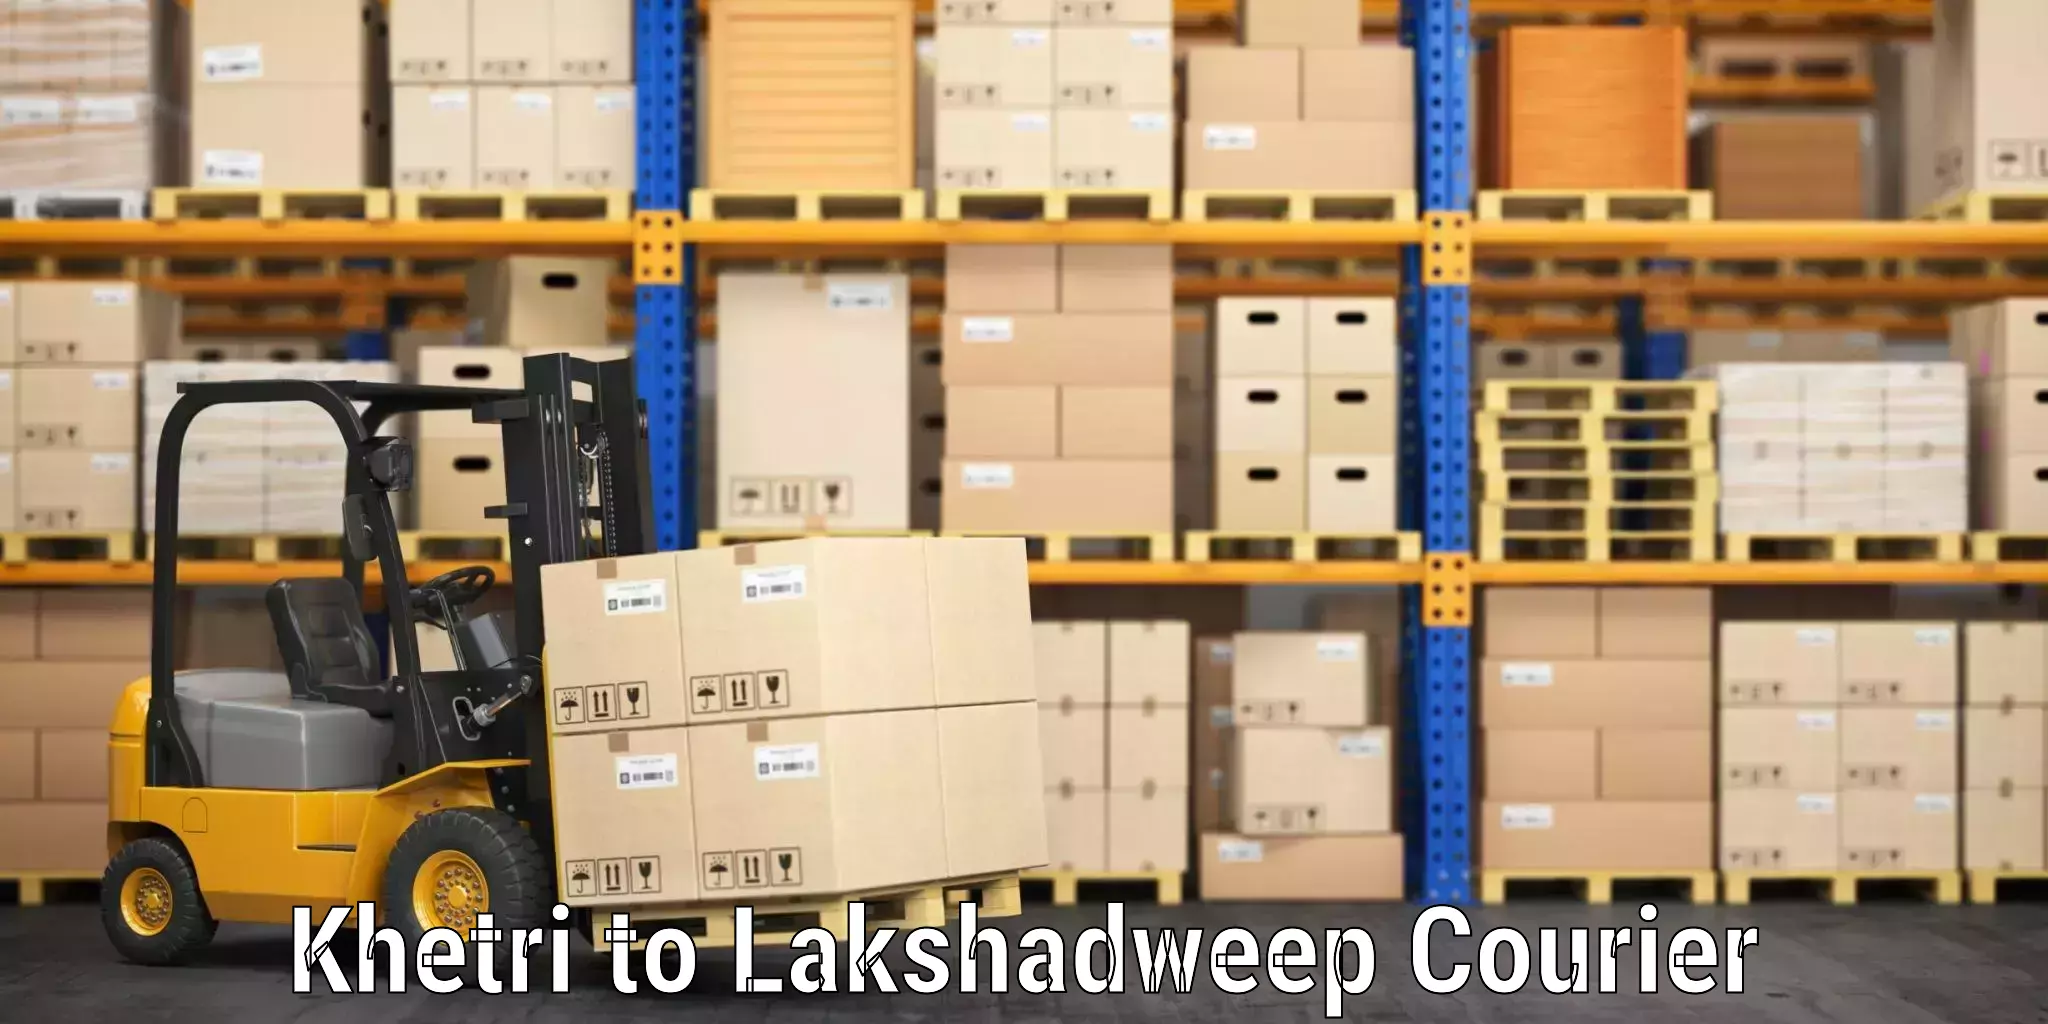 Luggage shipment processing Khetri to Lakshadweep